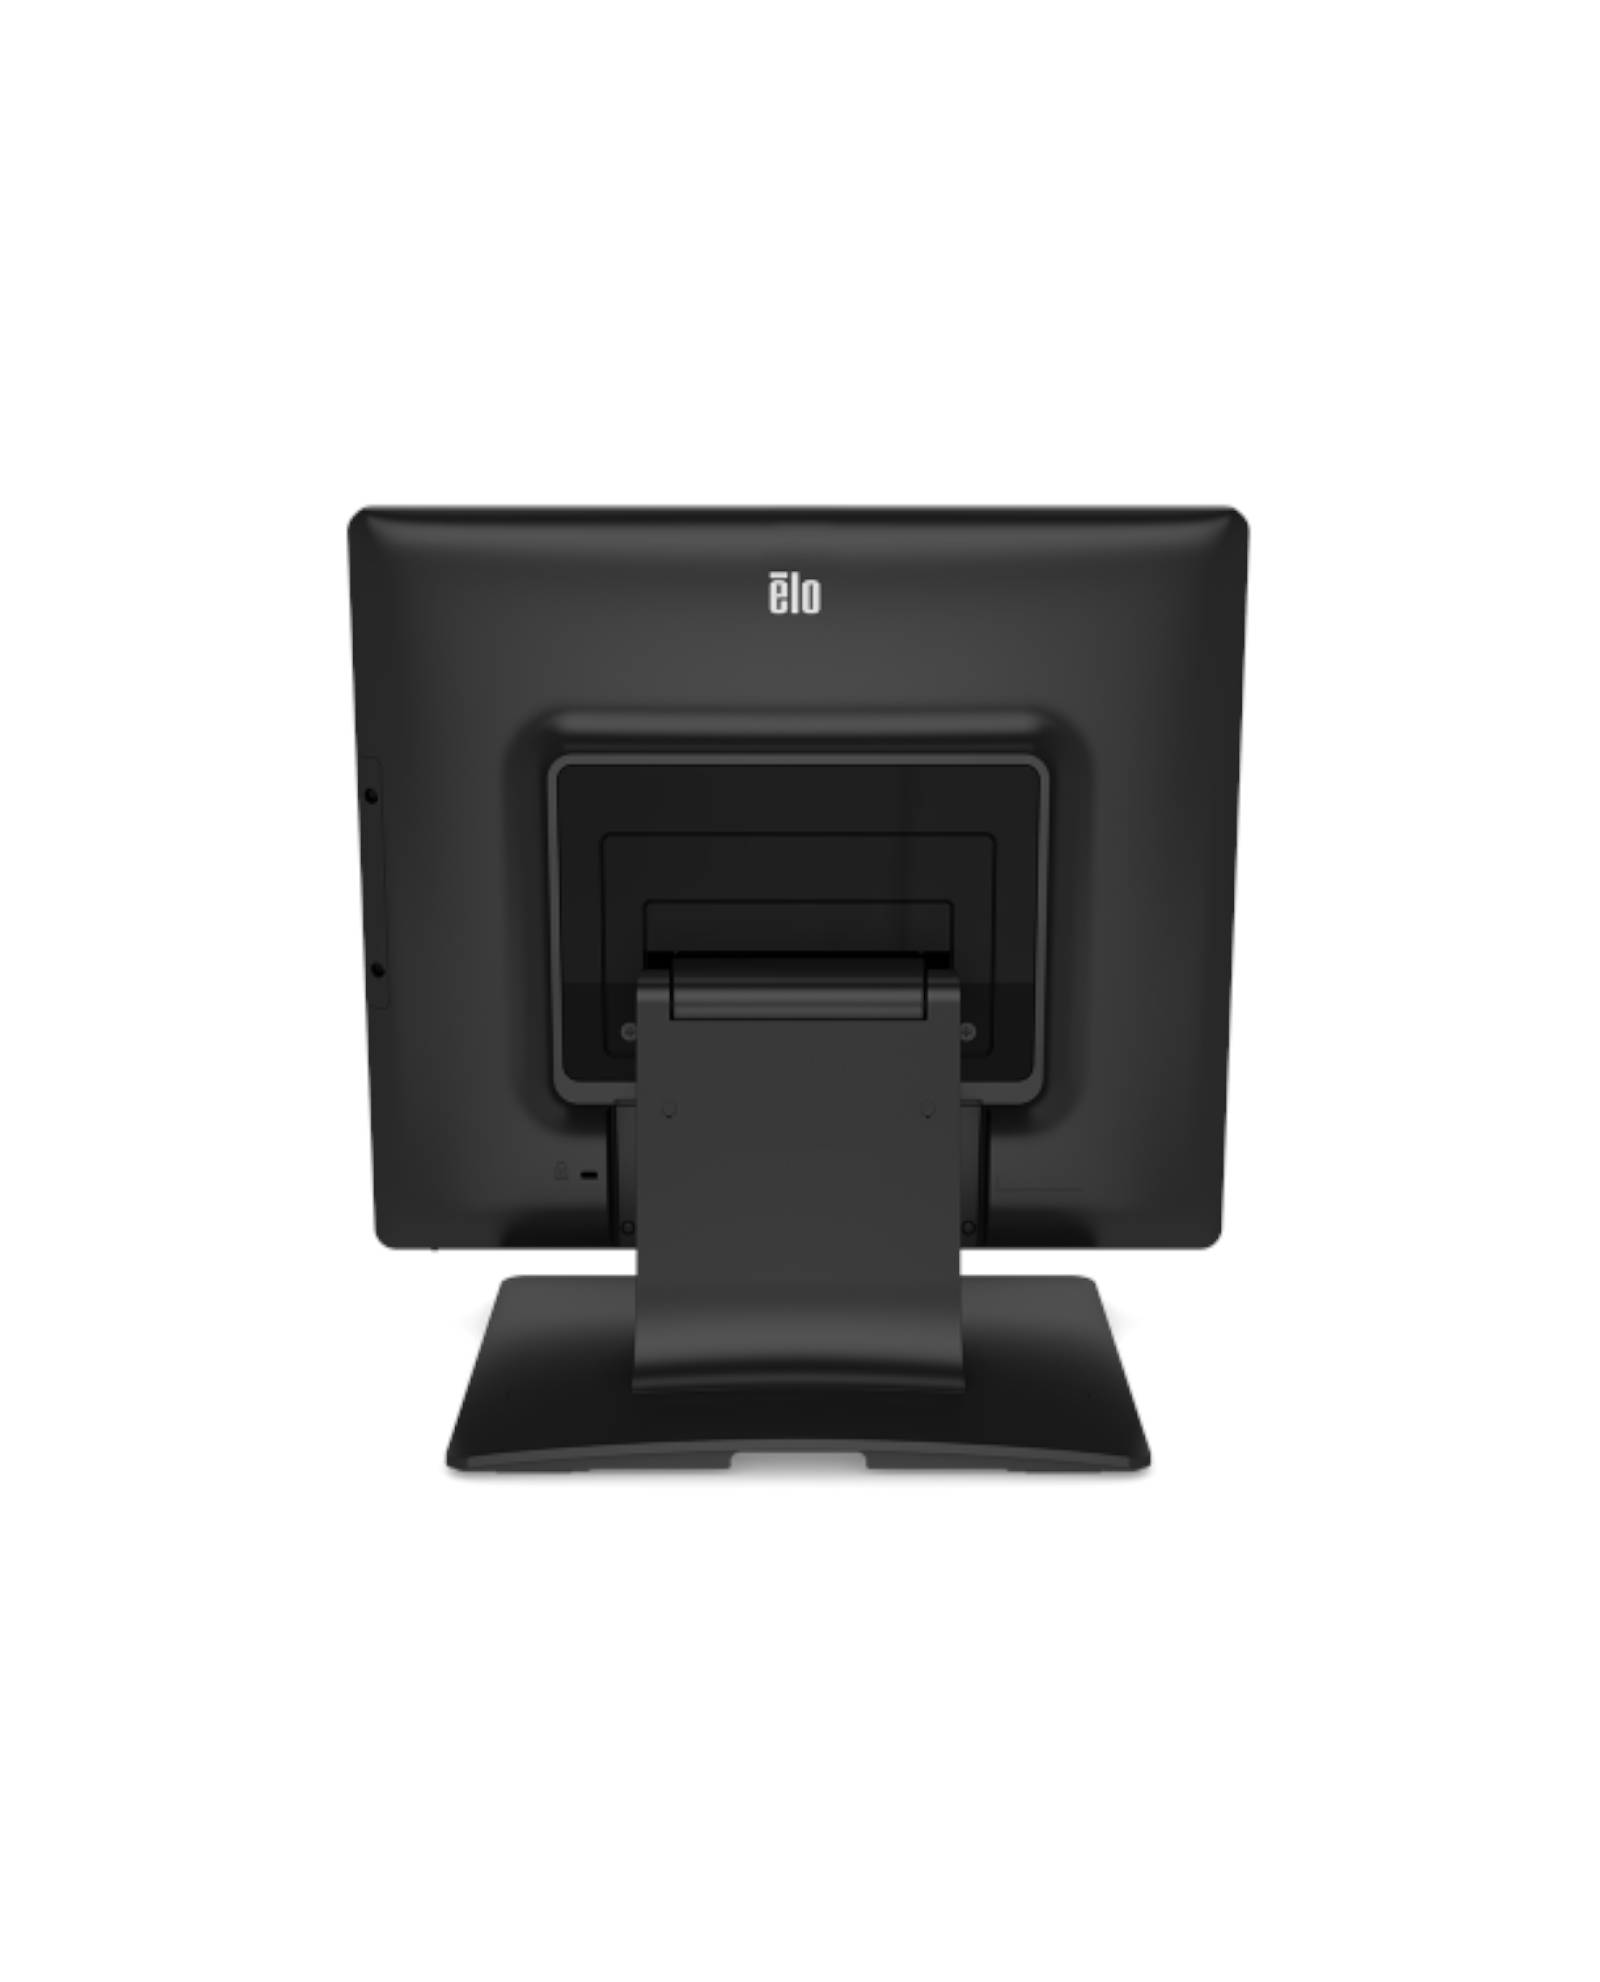 Elo 1517l 15inch Touchscreen Monitor